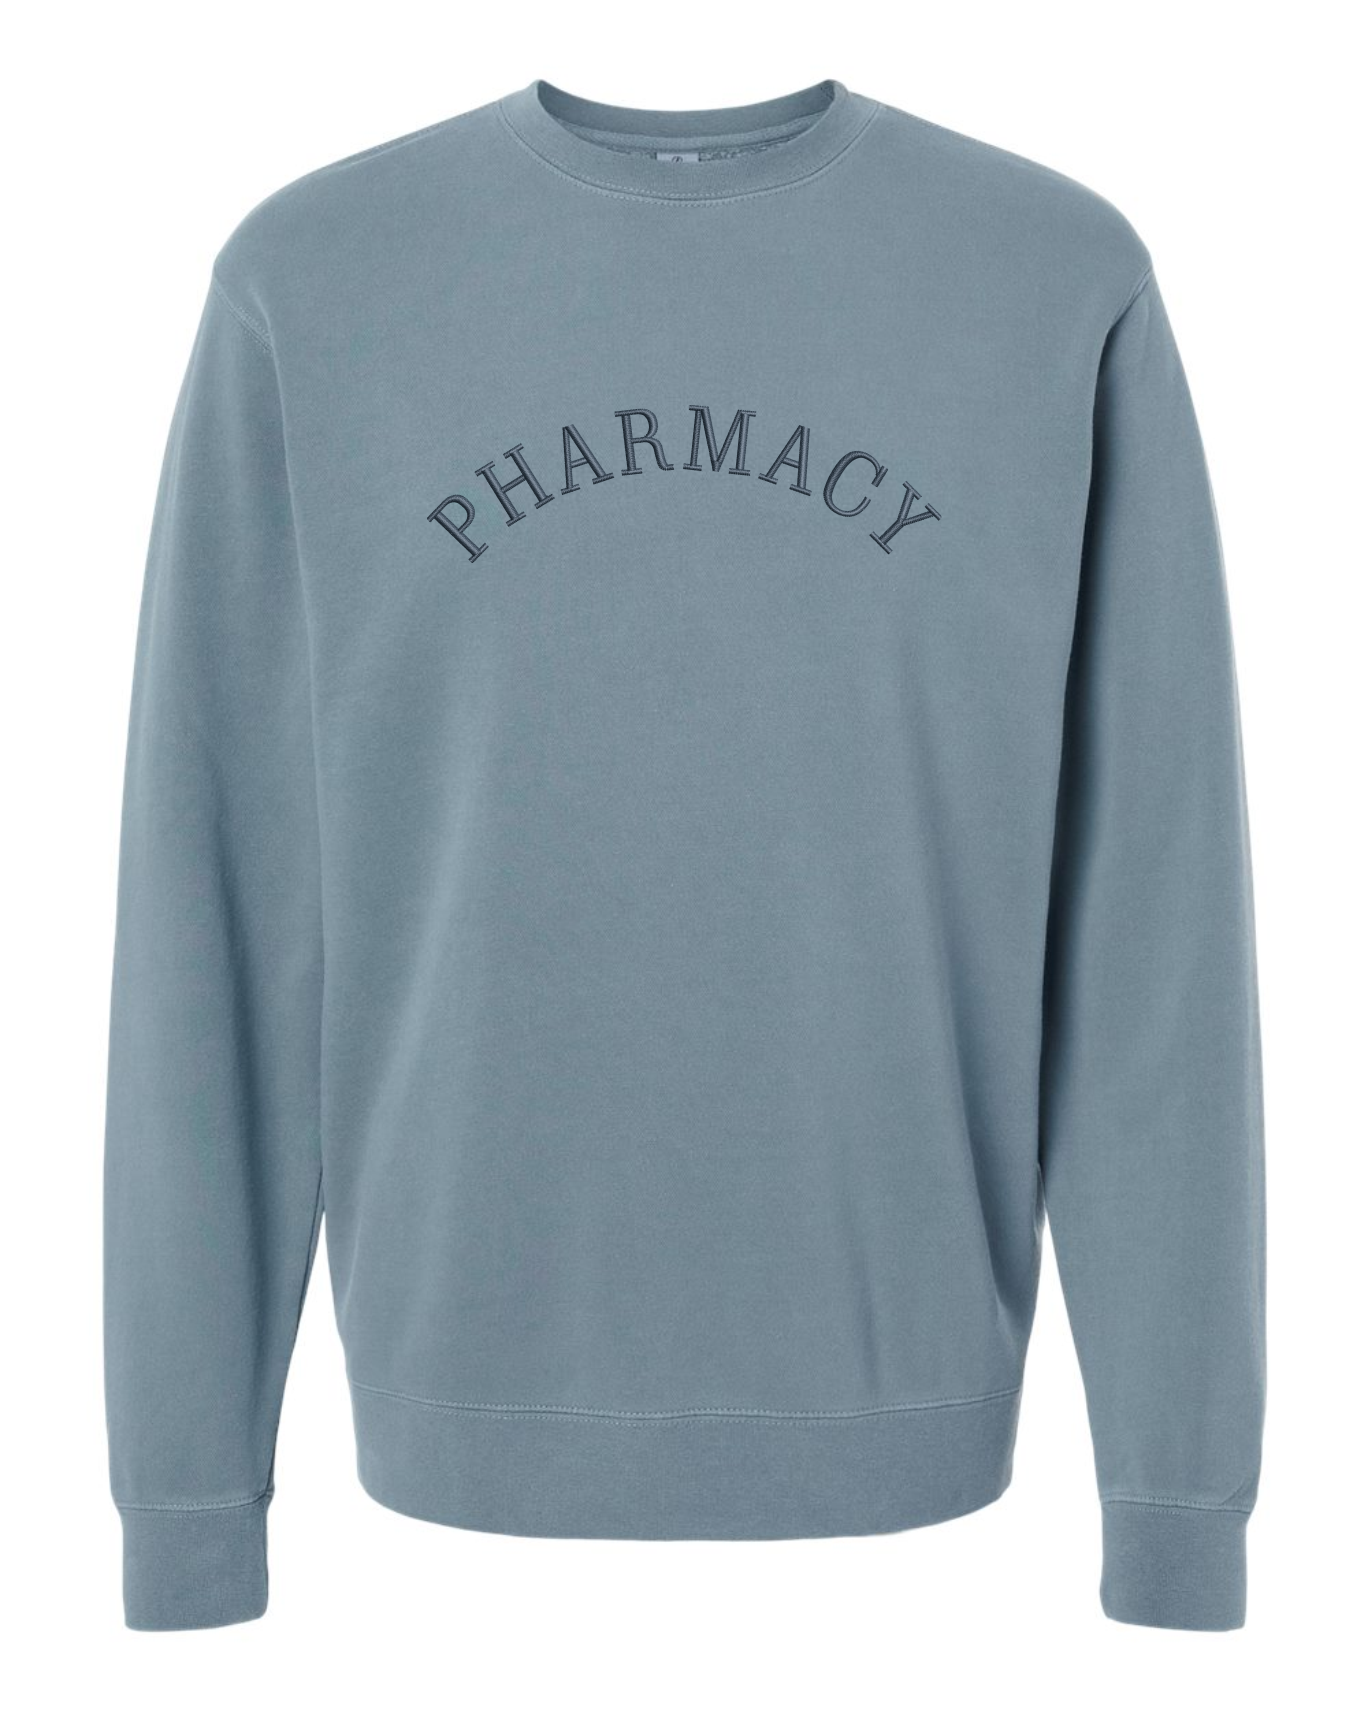 Pharmacy Embroidered Crewneck | Slate Blue